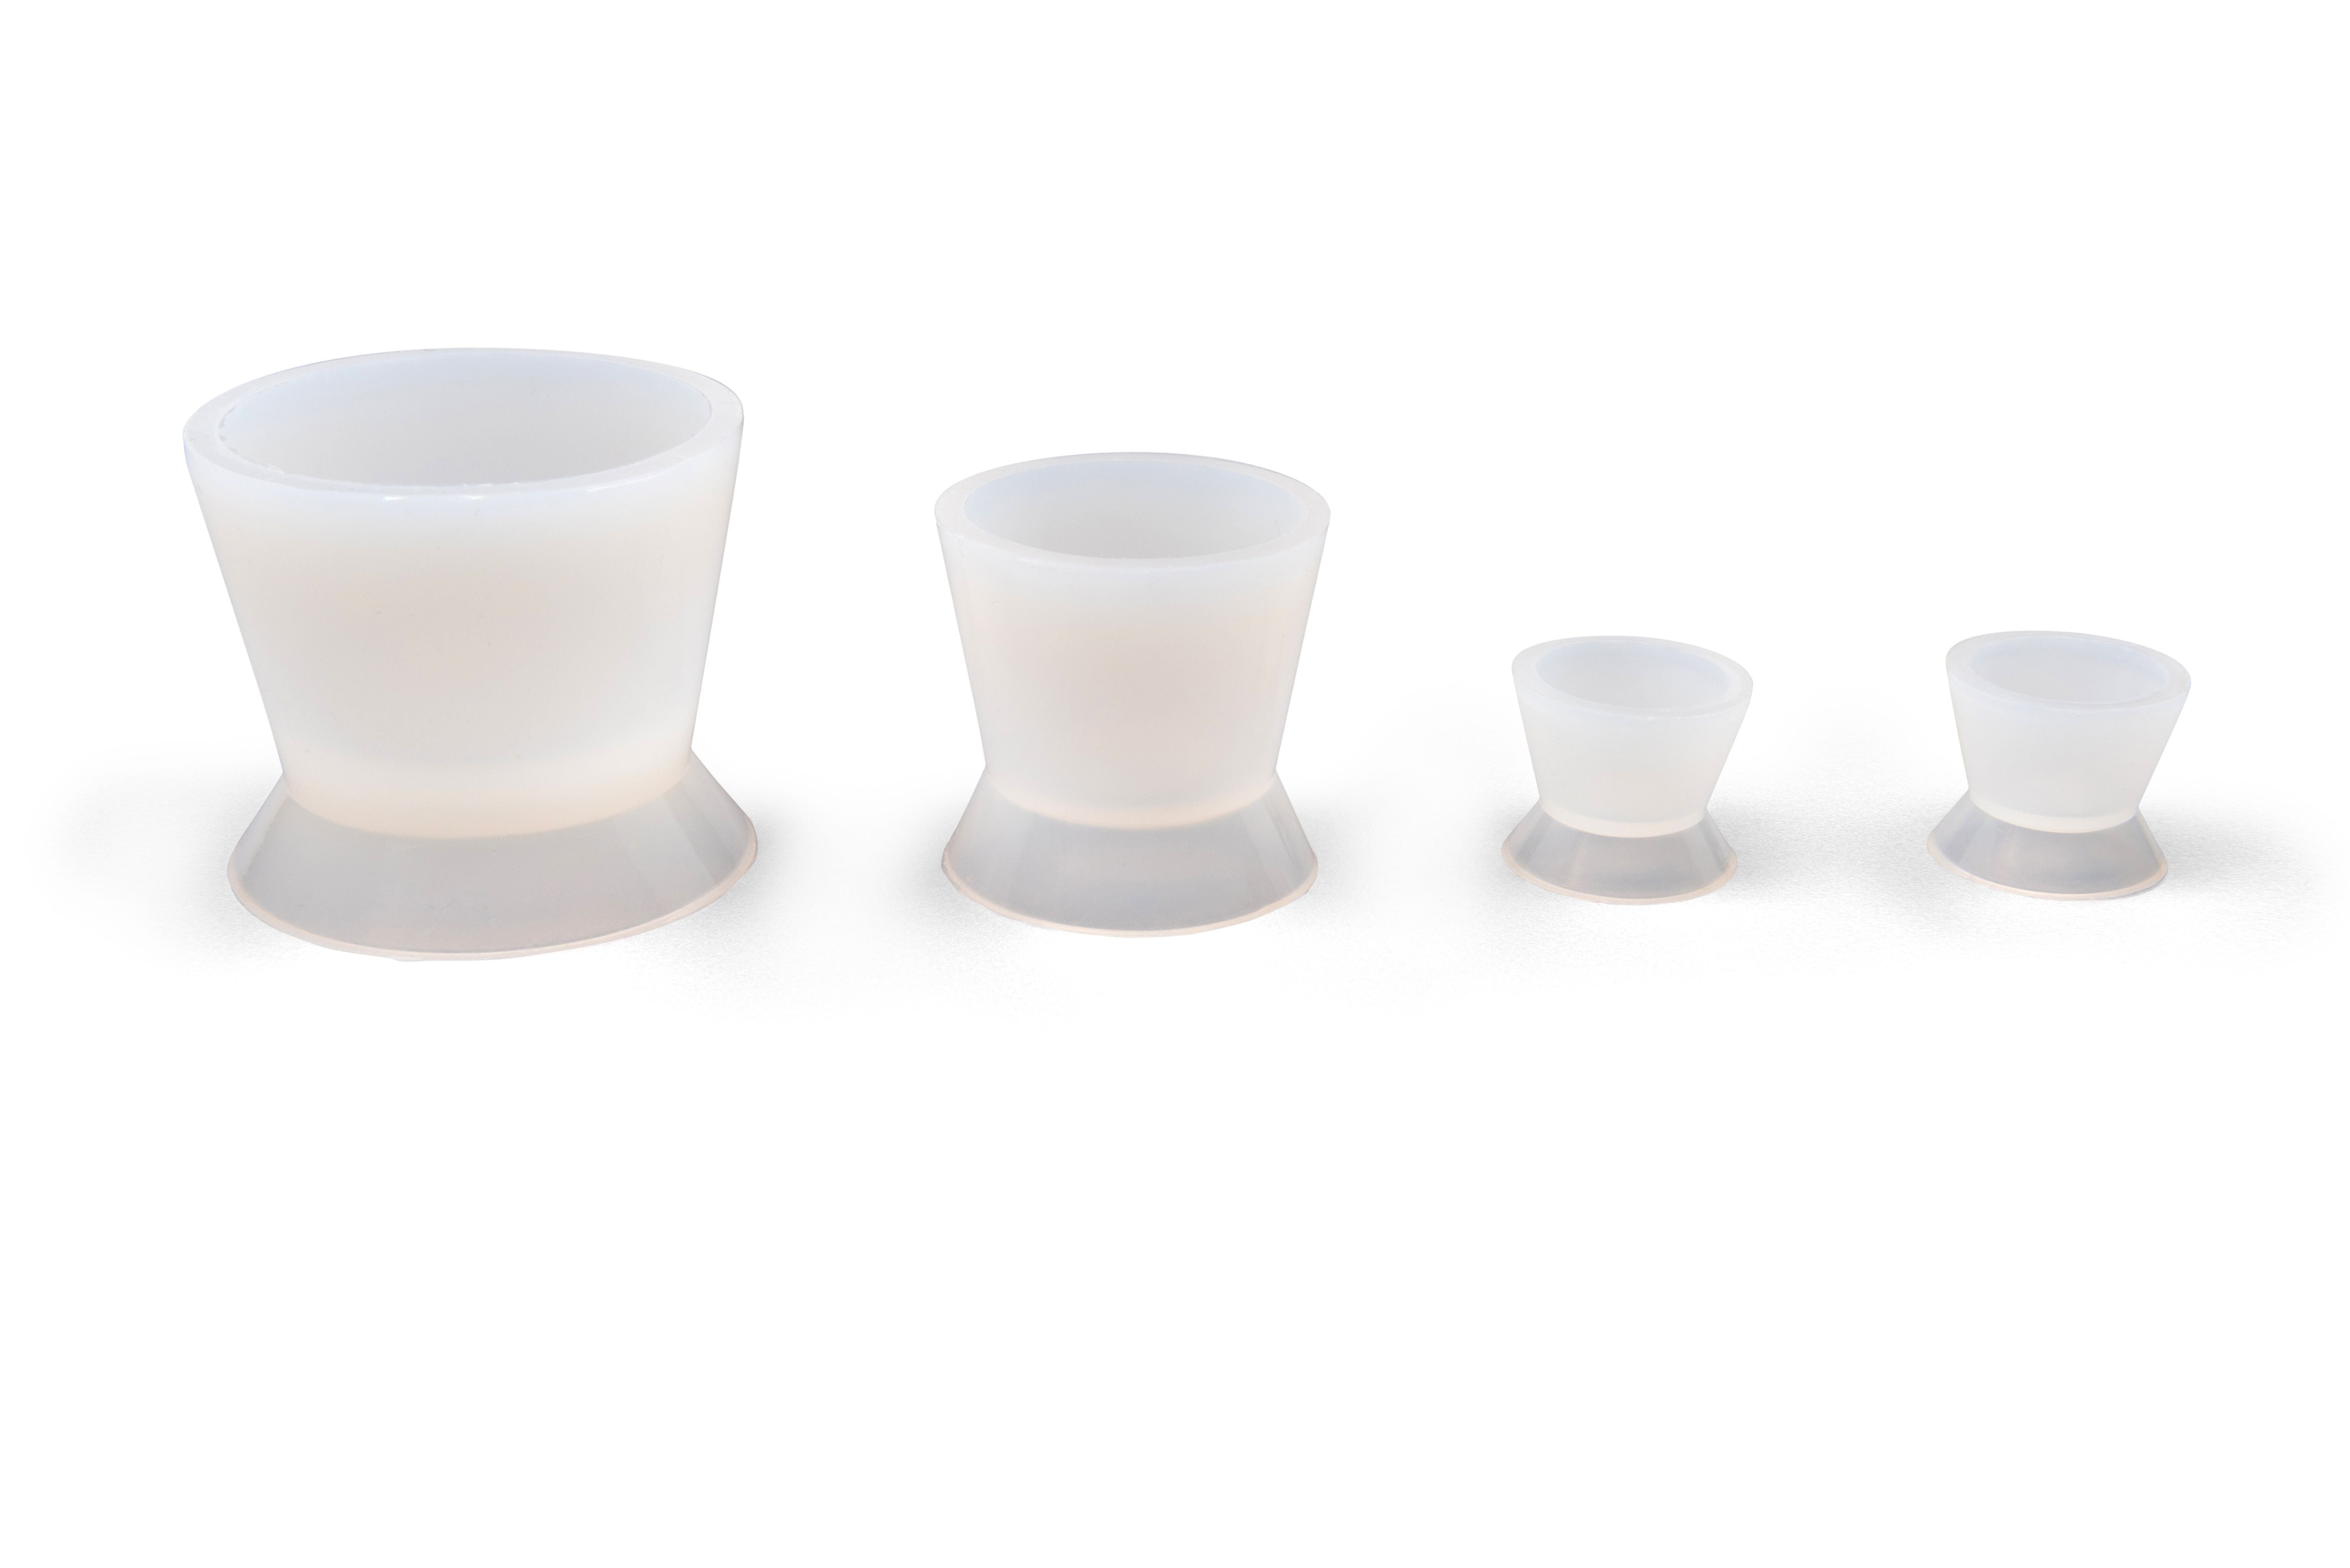 Mini-Bowls - Non-stick Silicon For Acrylics, W/suction Base